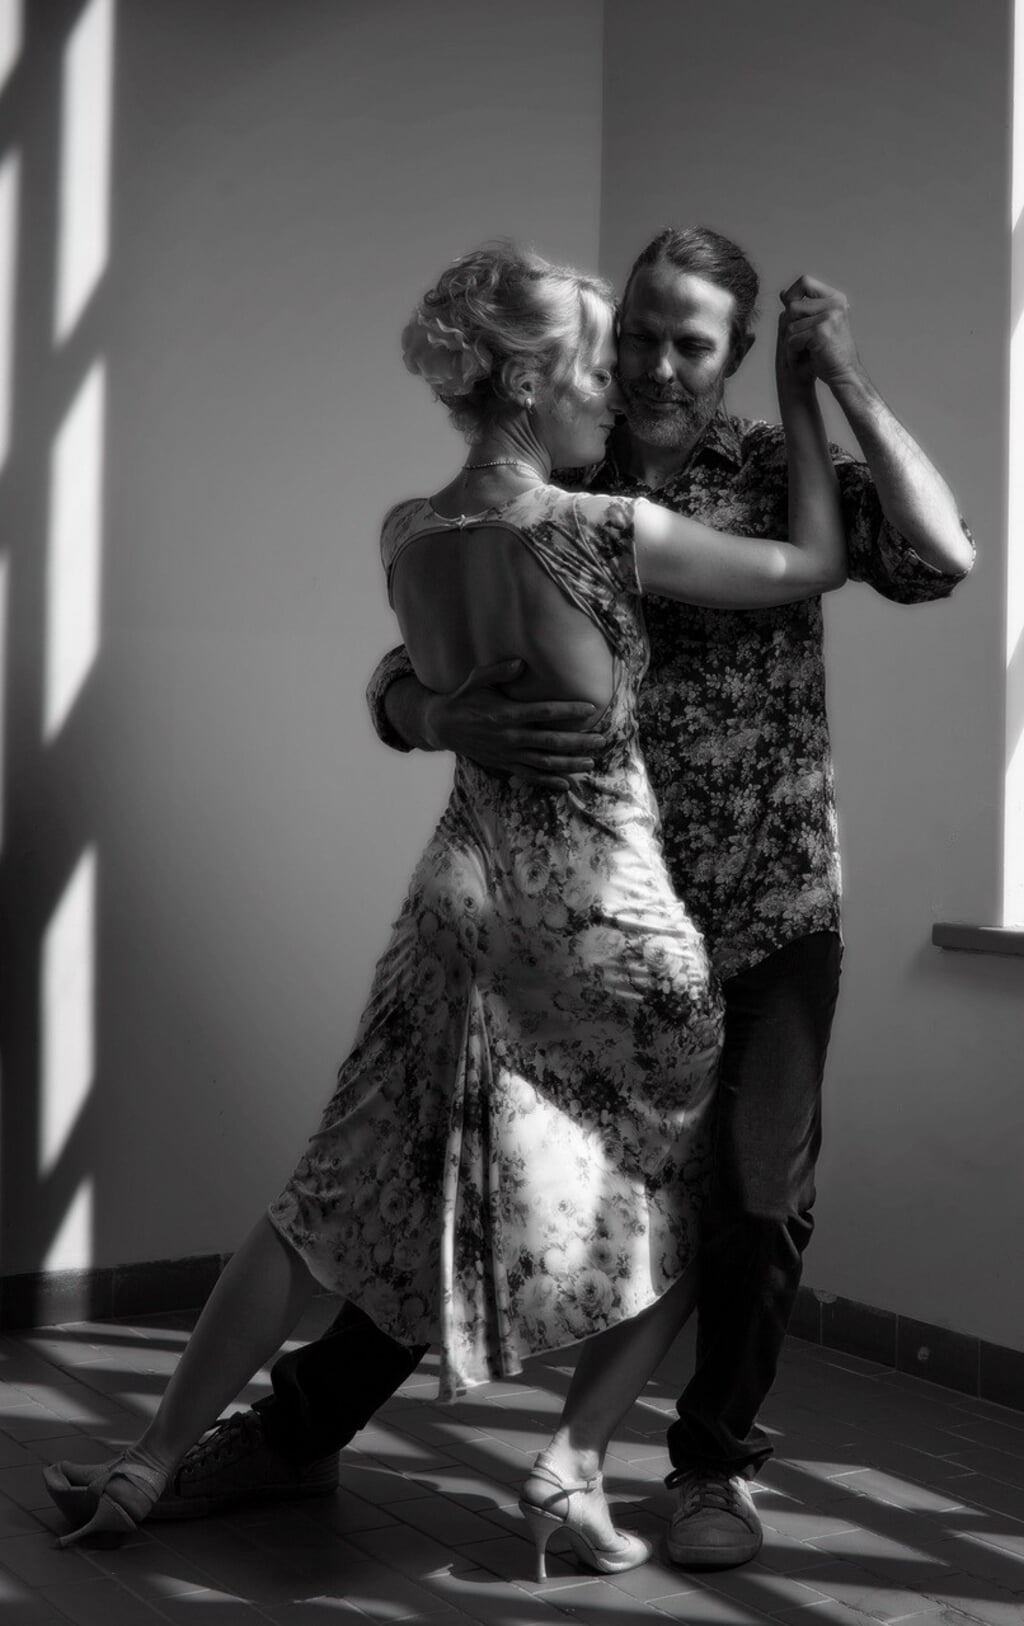 Lizelot de Stigter en Jillis de Winter dansen de Argentijnse tango. Foto: Mohan Dehne